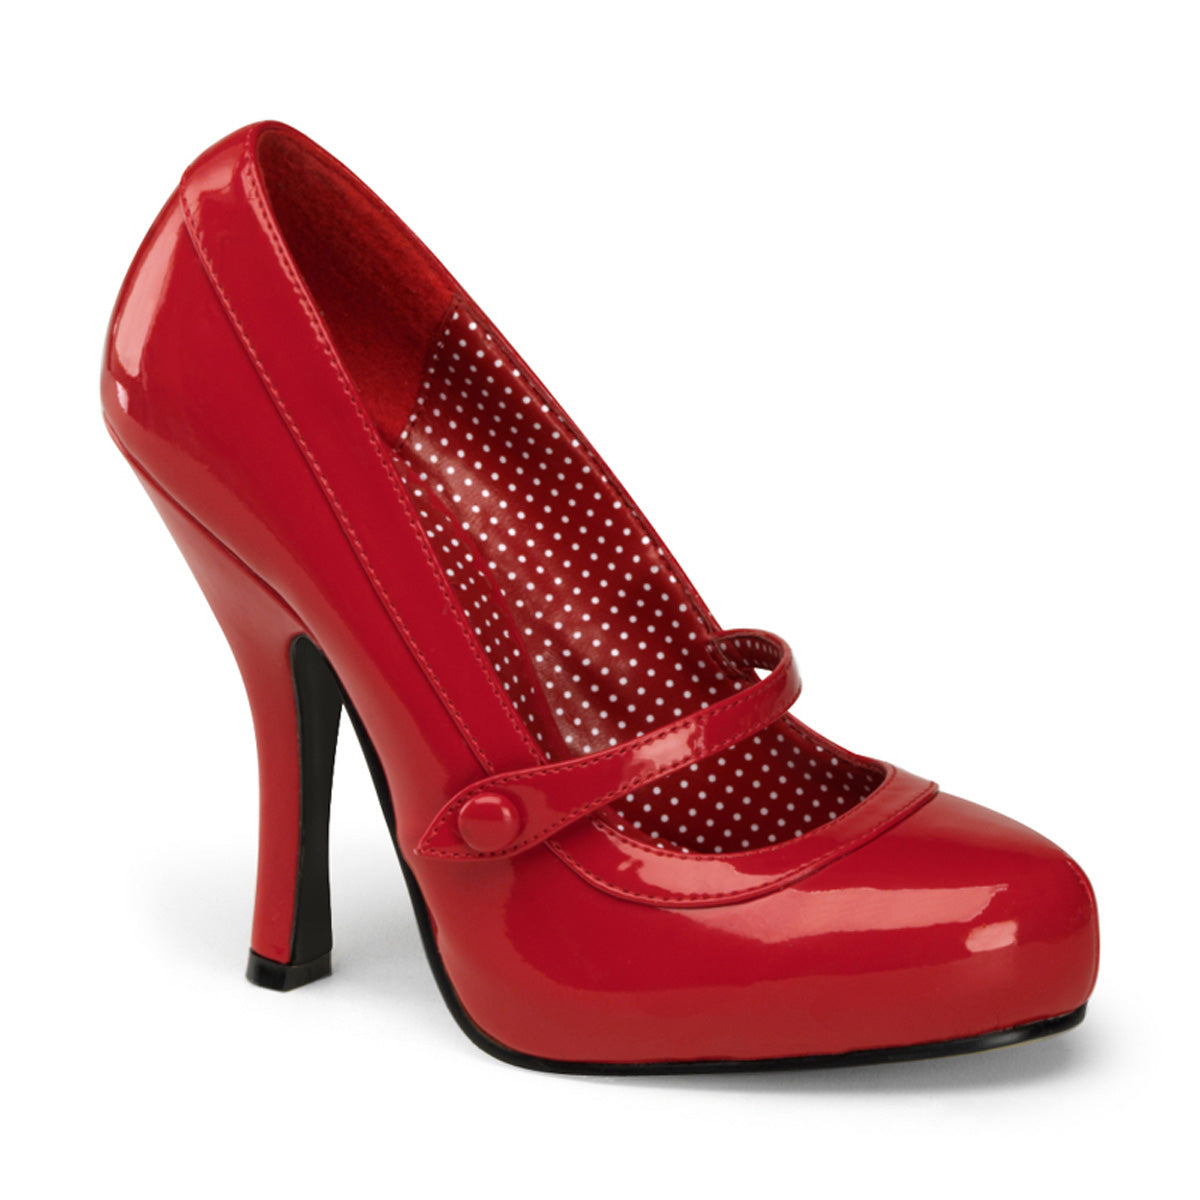 CUTIEPIE-02 Pin Up 4.5 Inch Heel Red Retro Glamour Platforms